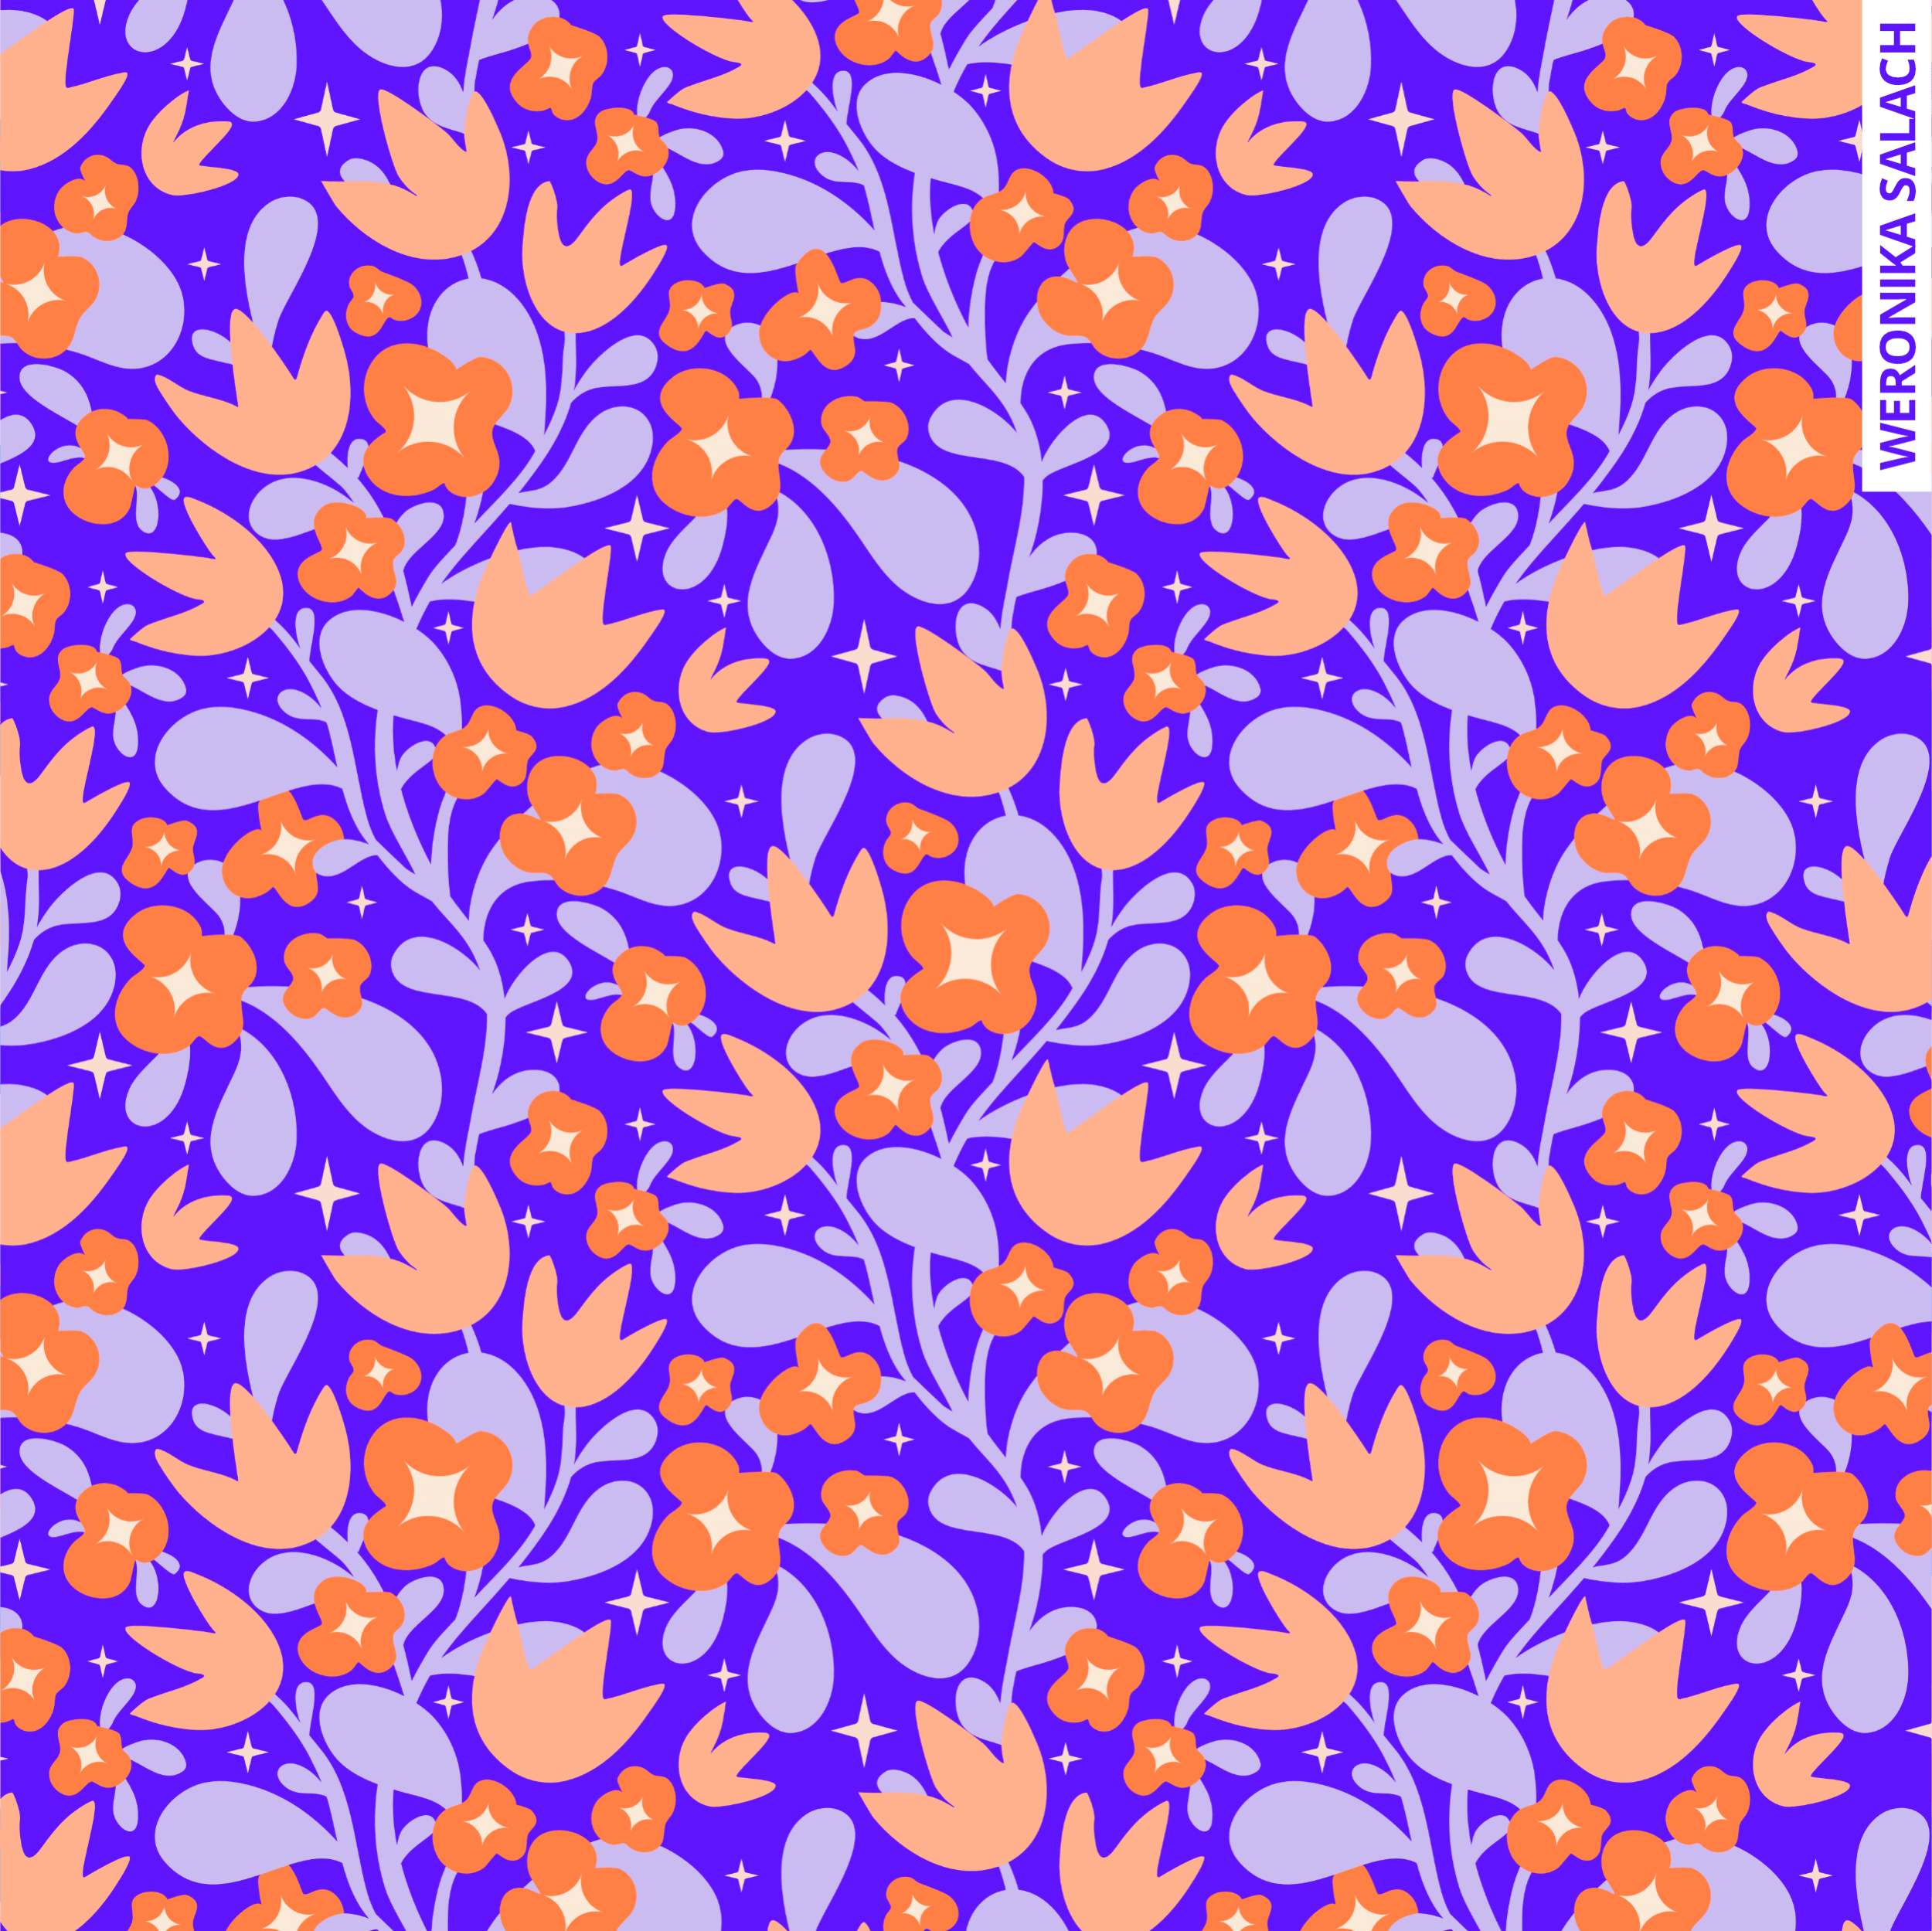 WS_repeat pattern_vibrant floral pattern ultraviolet blue cadmium orange_2.png